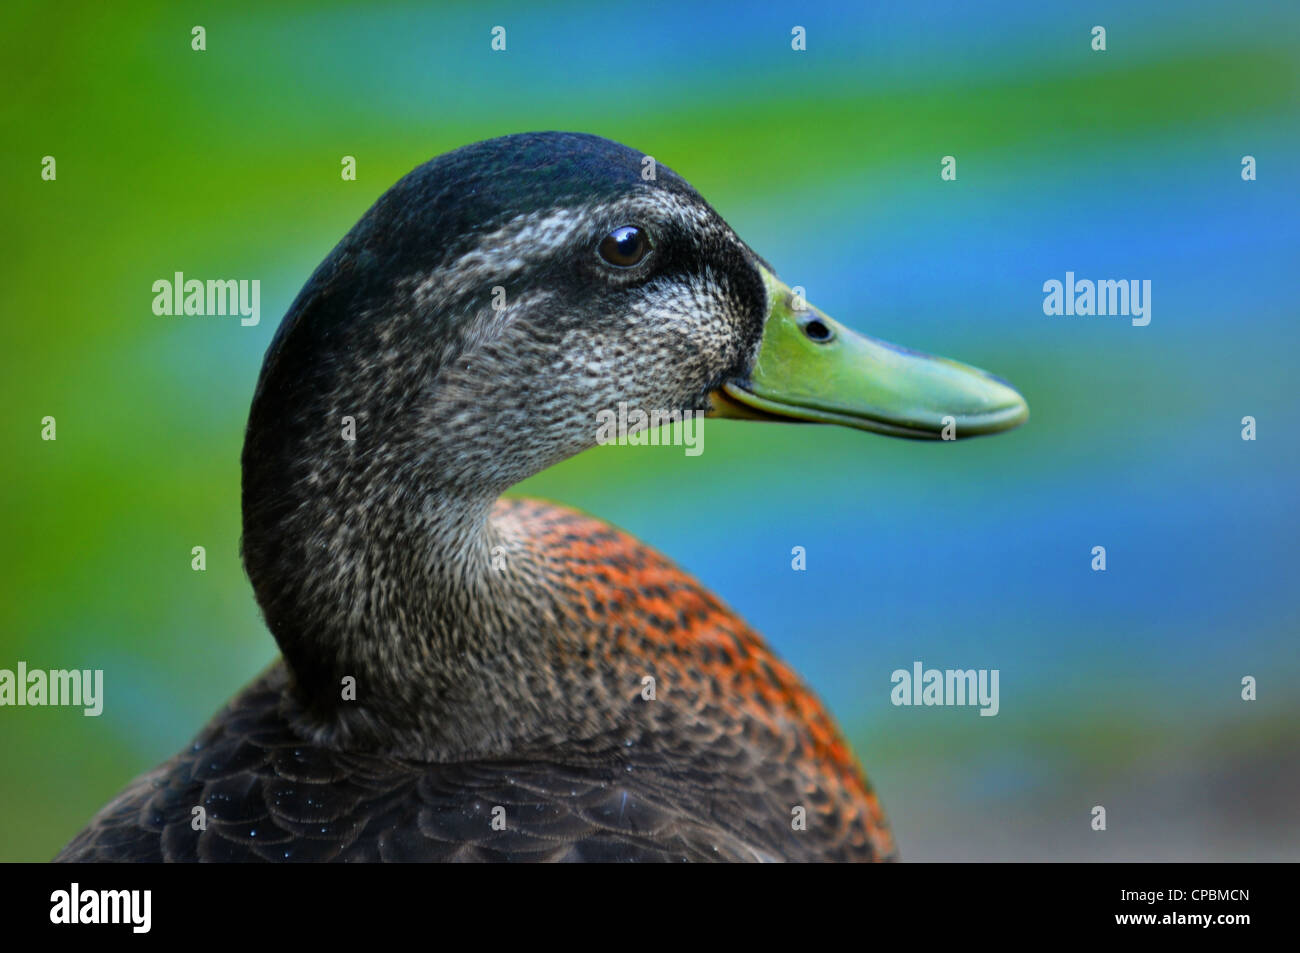 Retrato de pato silvestre con fondo verde y azul del agua Foto de stock